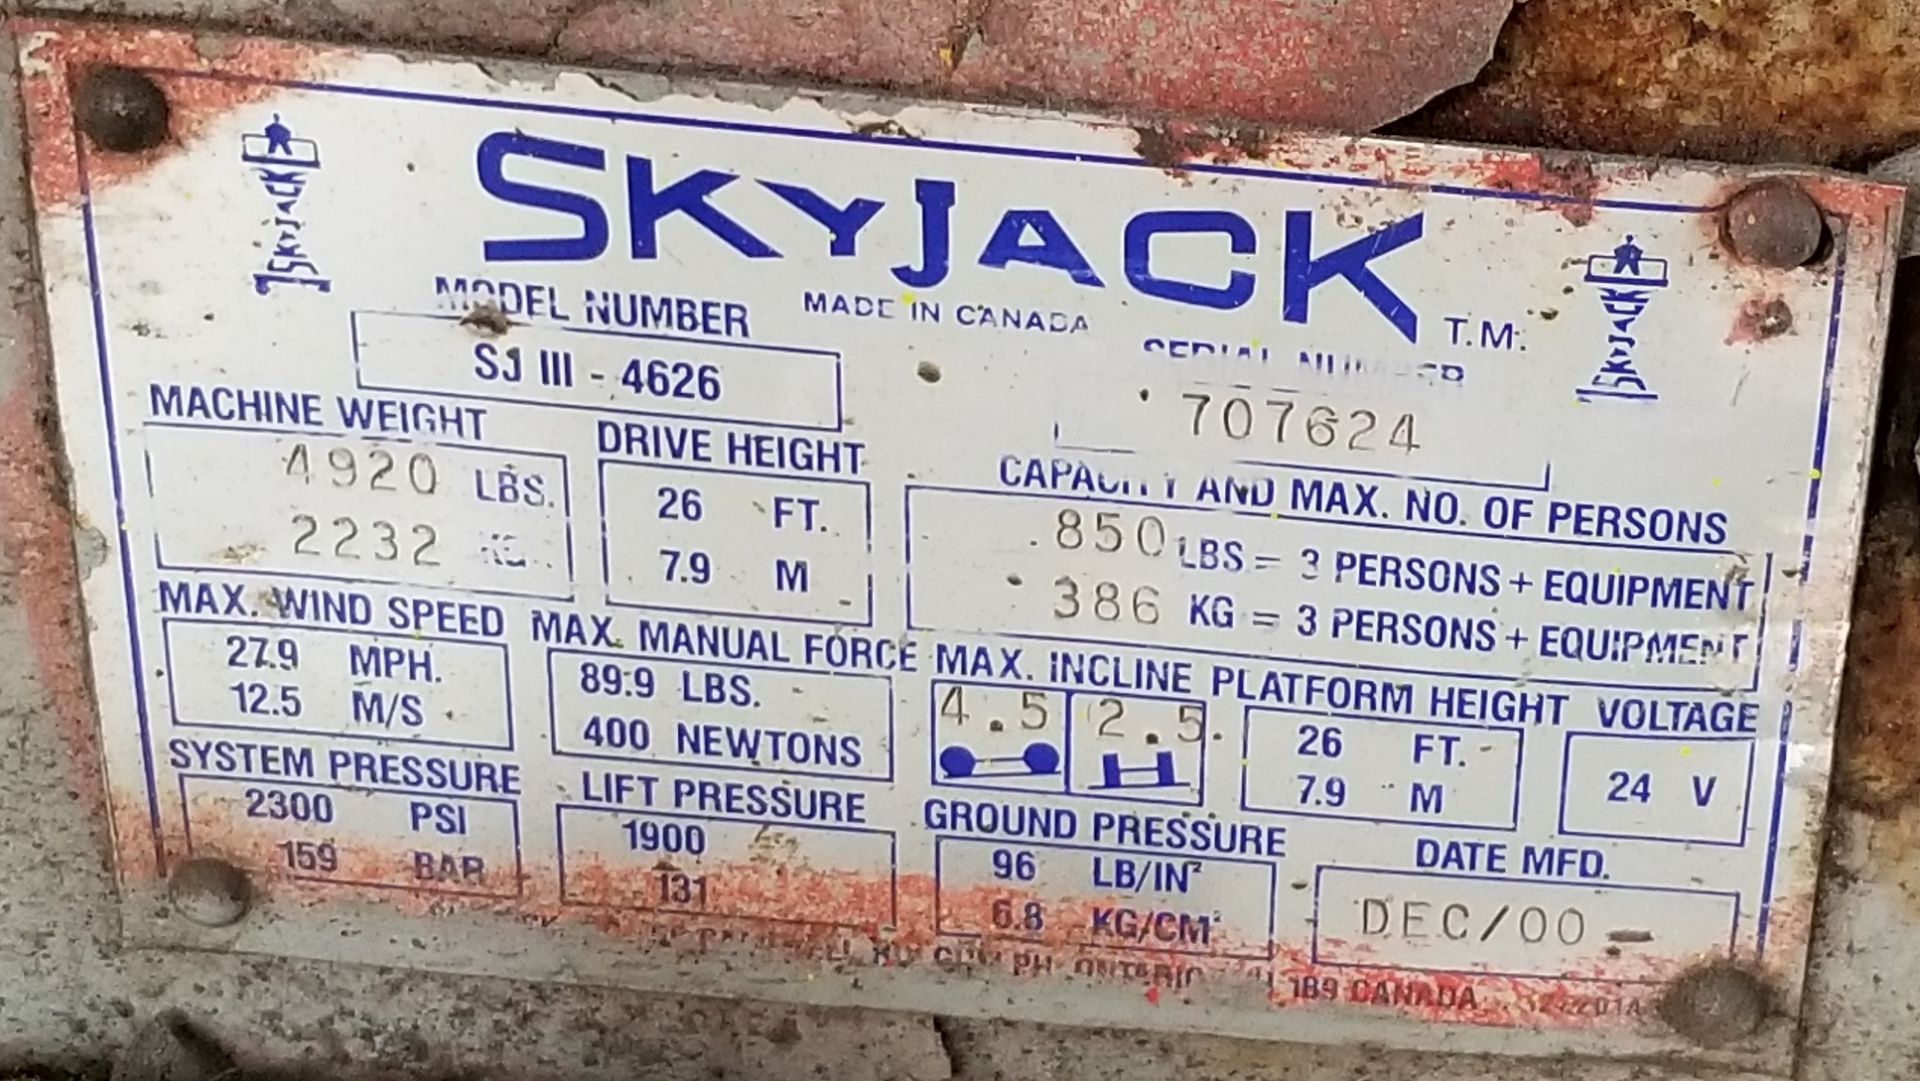 SKYJACK SJIII 4626 ELECTRIC SCISSOR LIFT WITH 850 LB. CAPACITY, 384" MAX. WORK HEIGHT, S/N: 707624 - Image 4 of 4